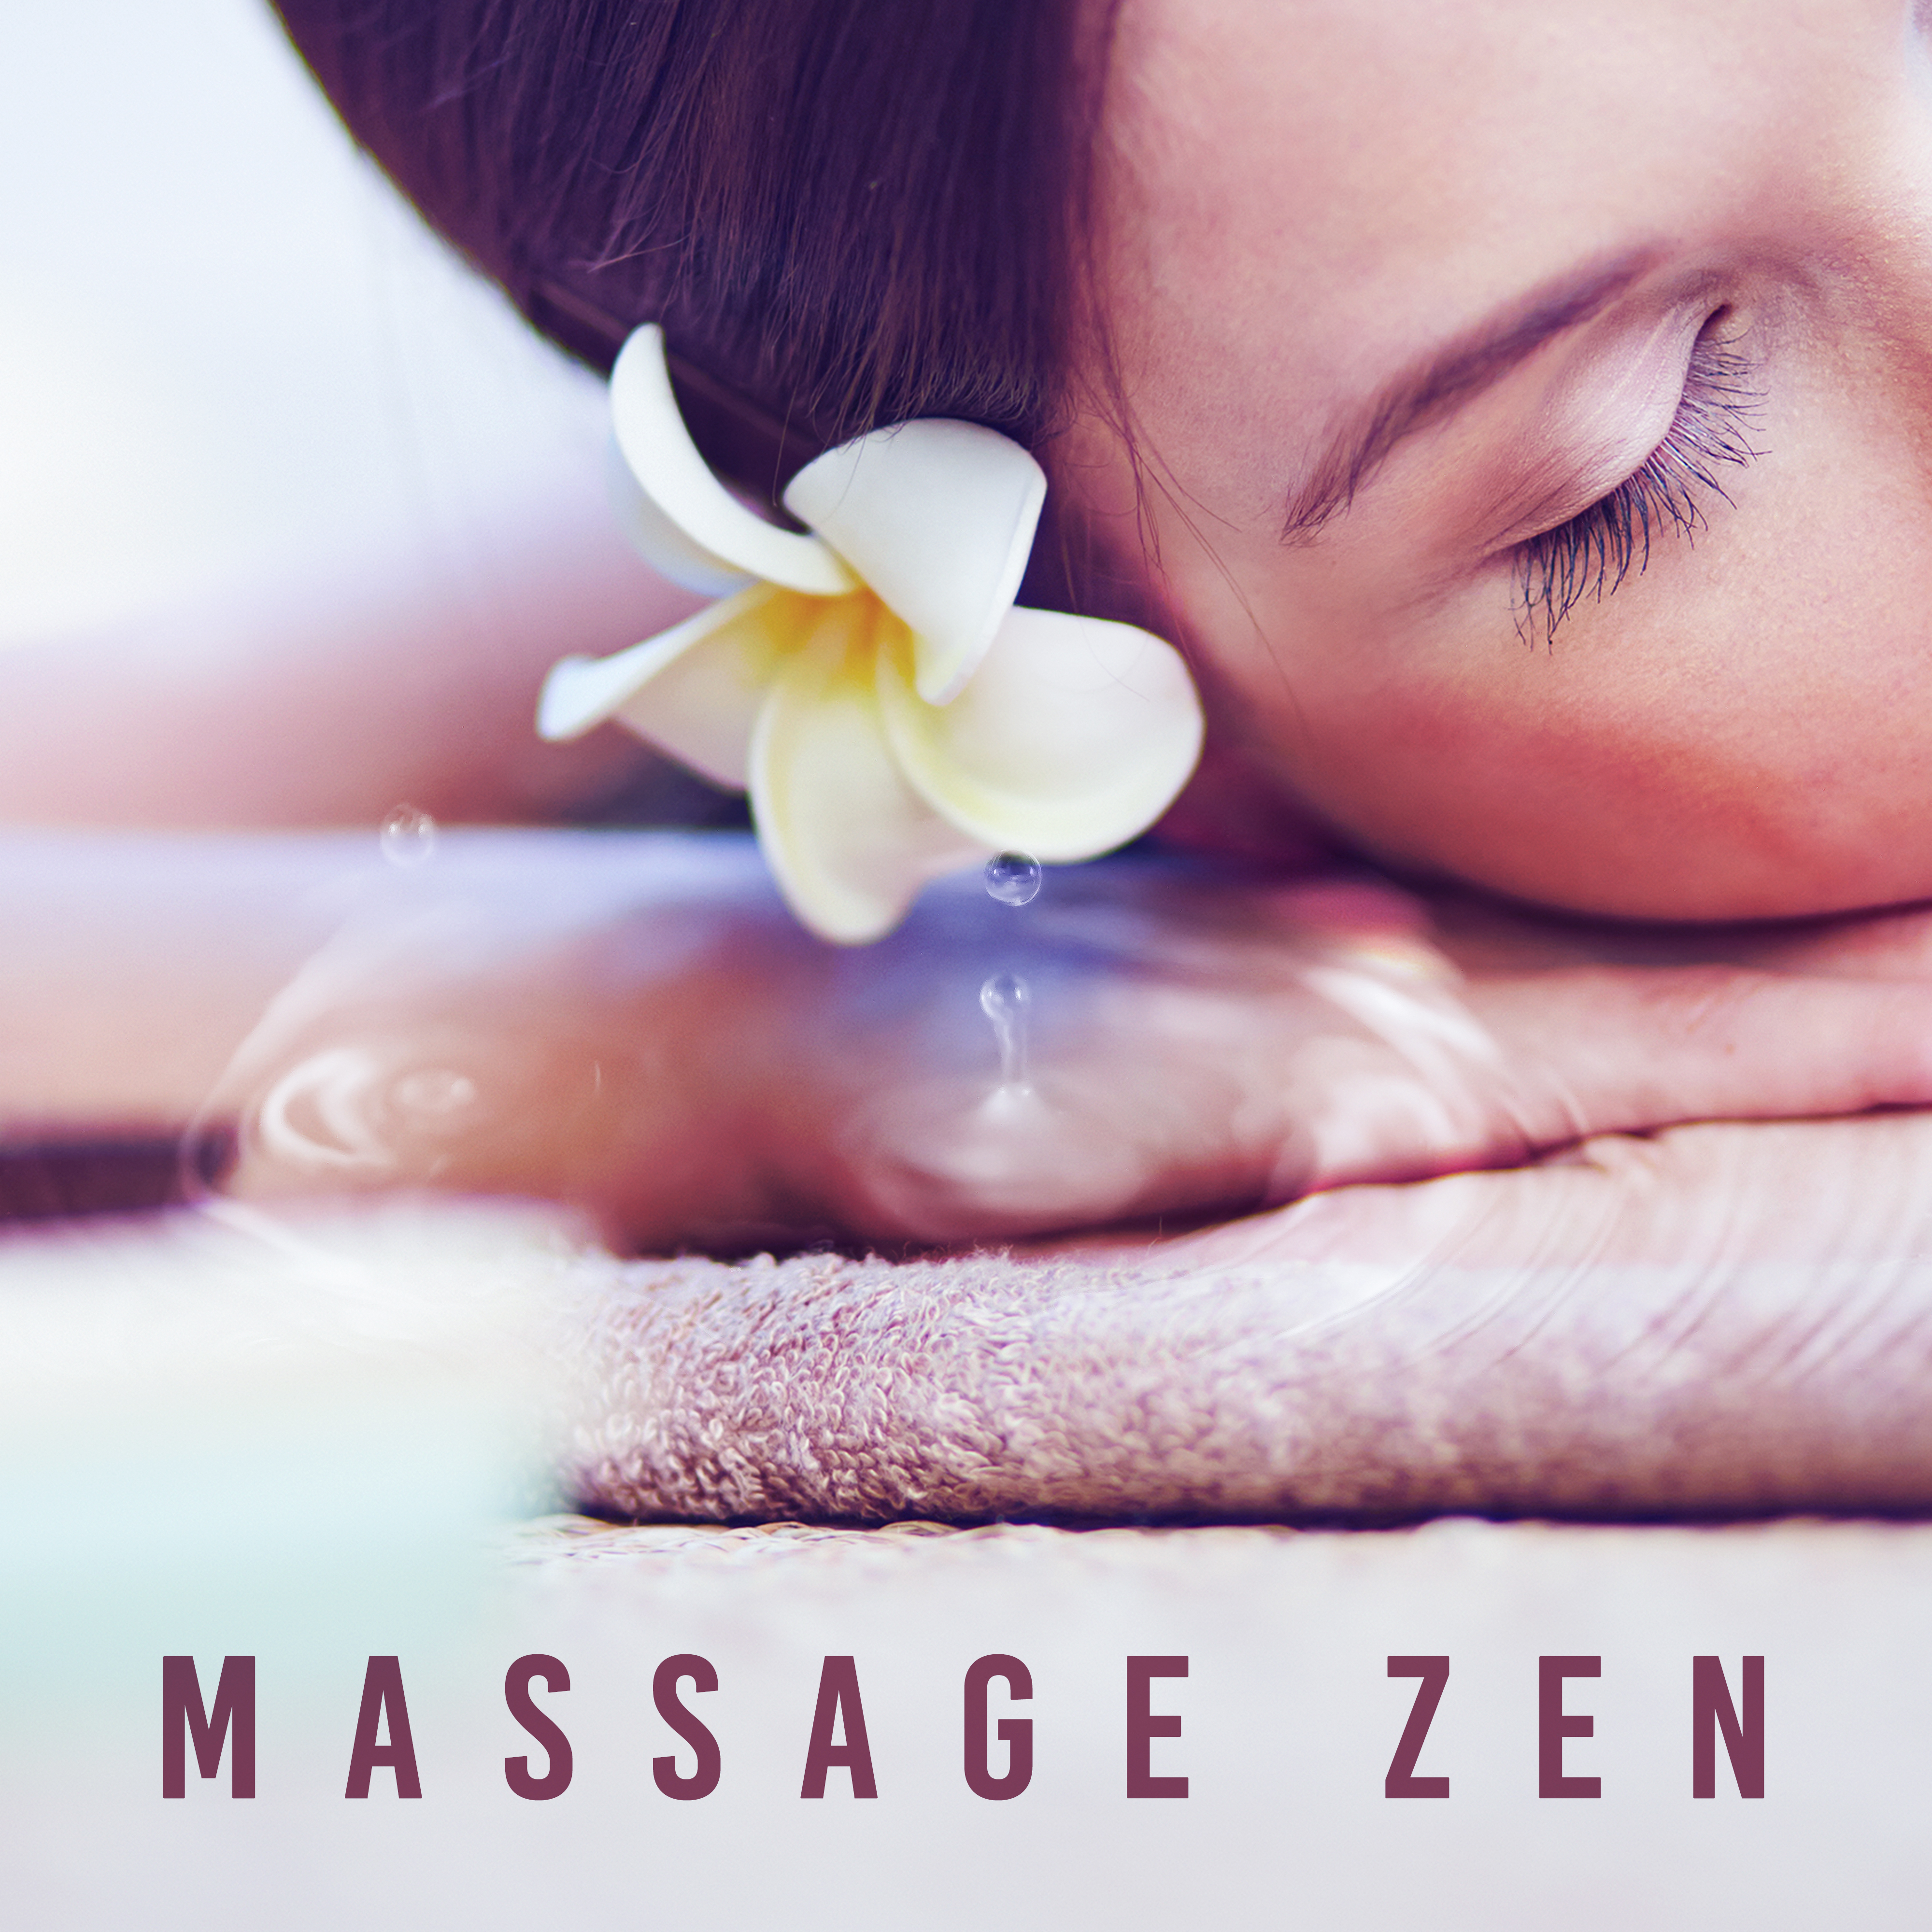 Massage Zen  Relaxing Music, New Age, Massage, Spa, Healing Sounds of Nature, Calming Music, Deep Relaxation